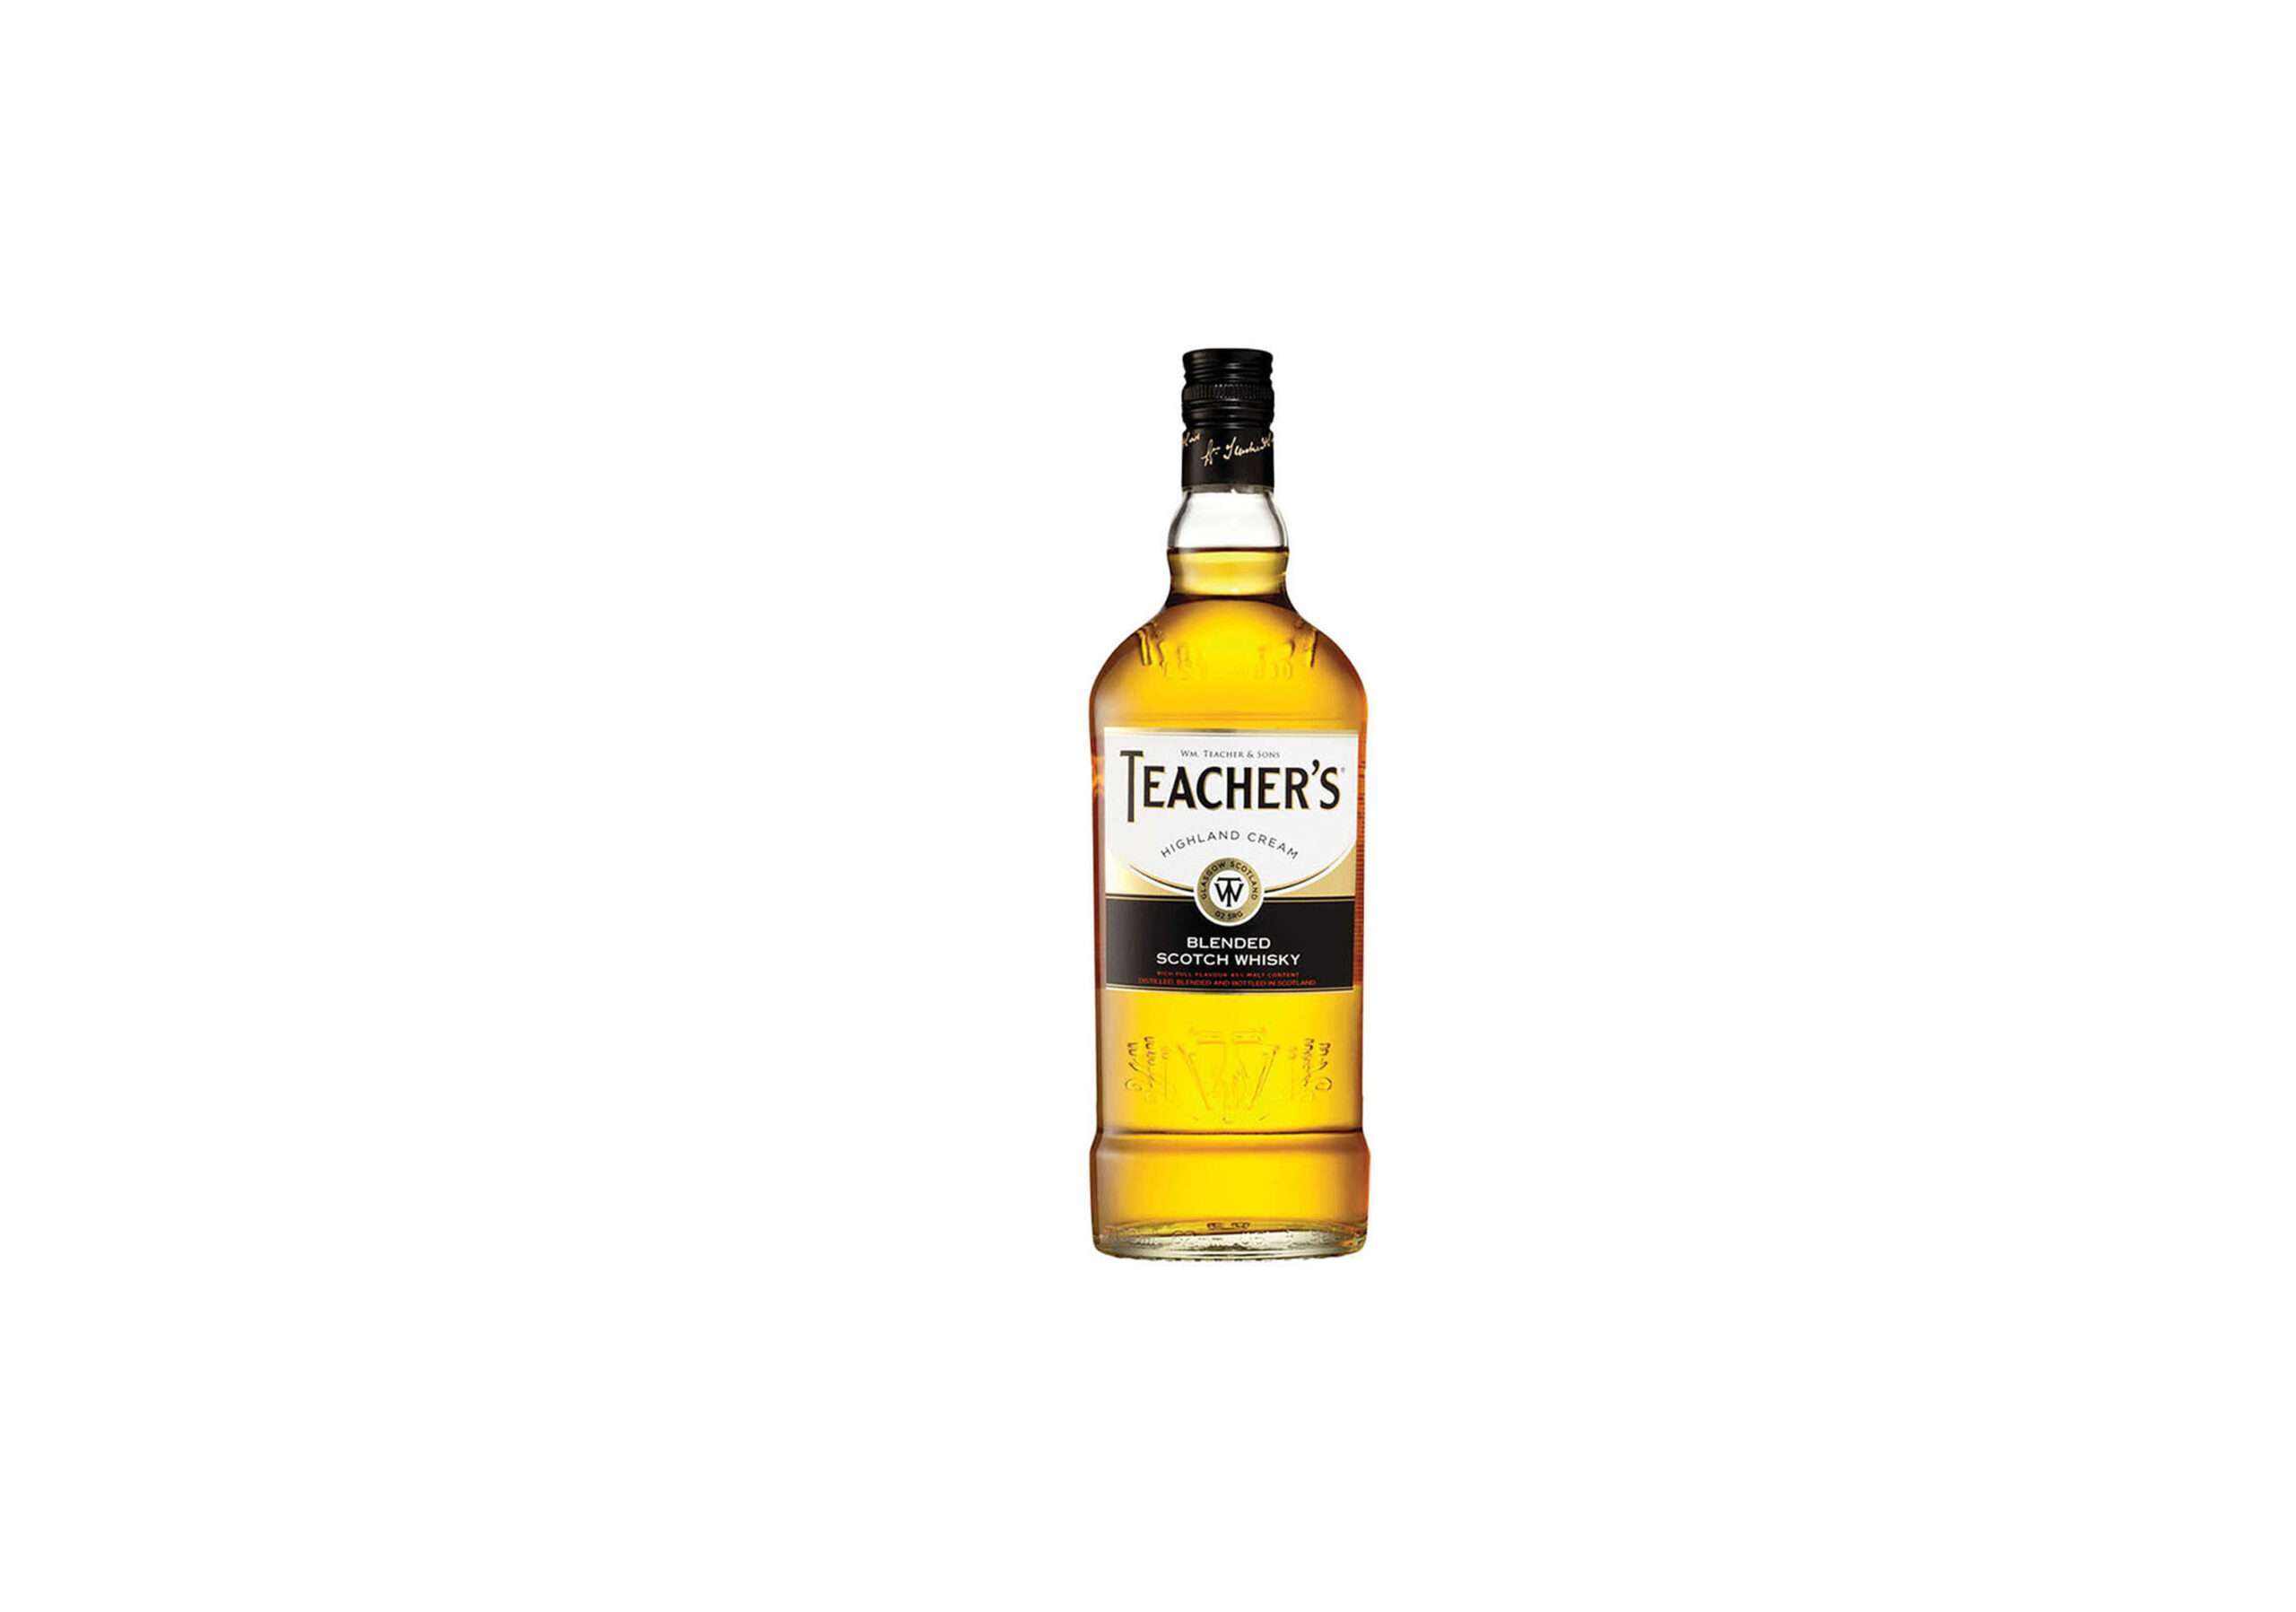 BLND Scotch Whisky: Teacher’s 40% (თიჩერსი)